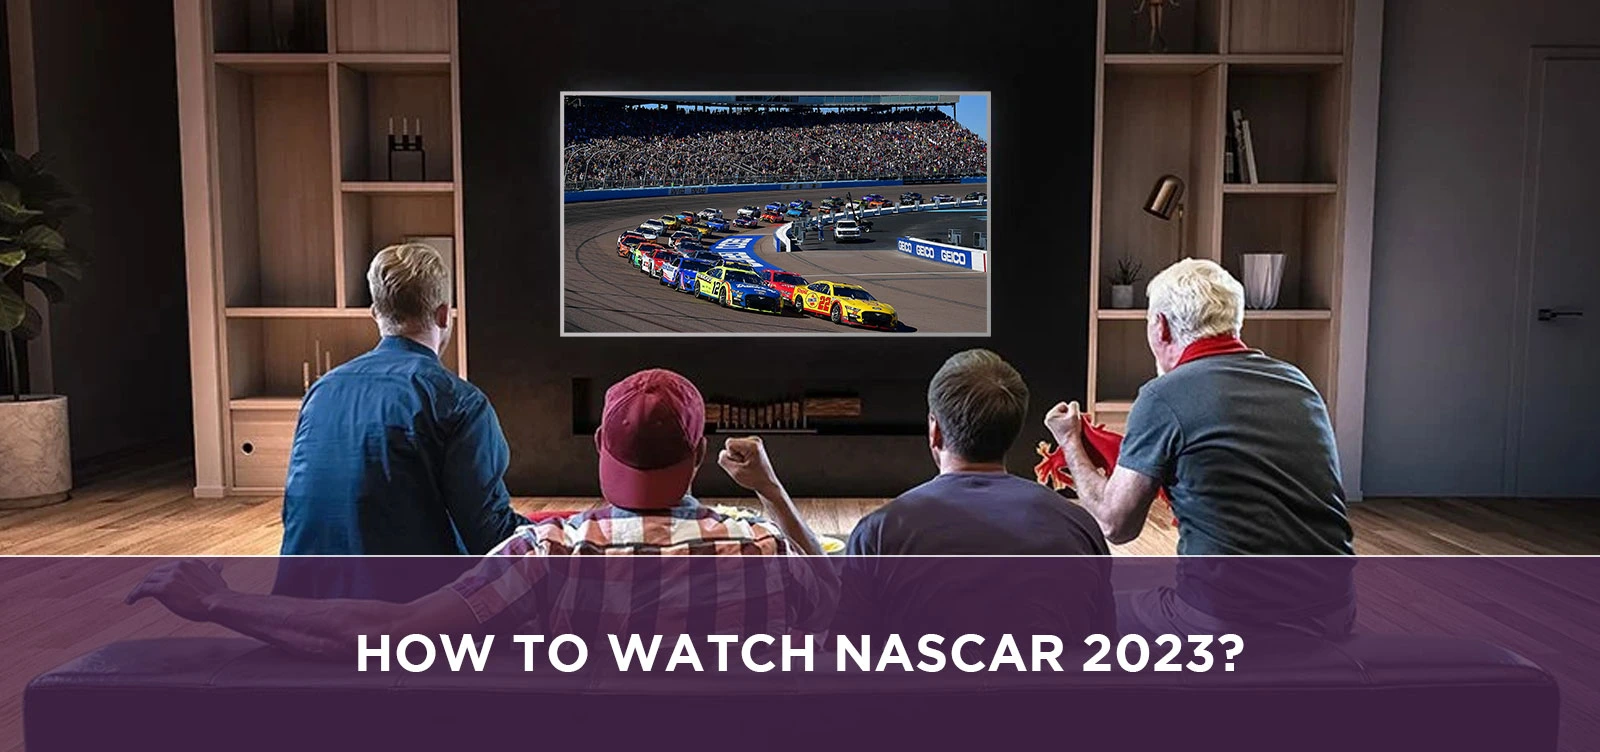 How to Watch NASCAR 2023?